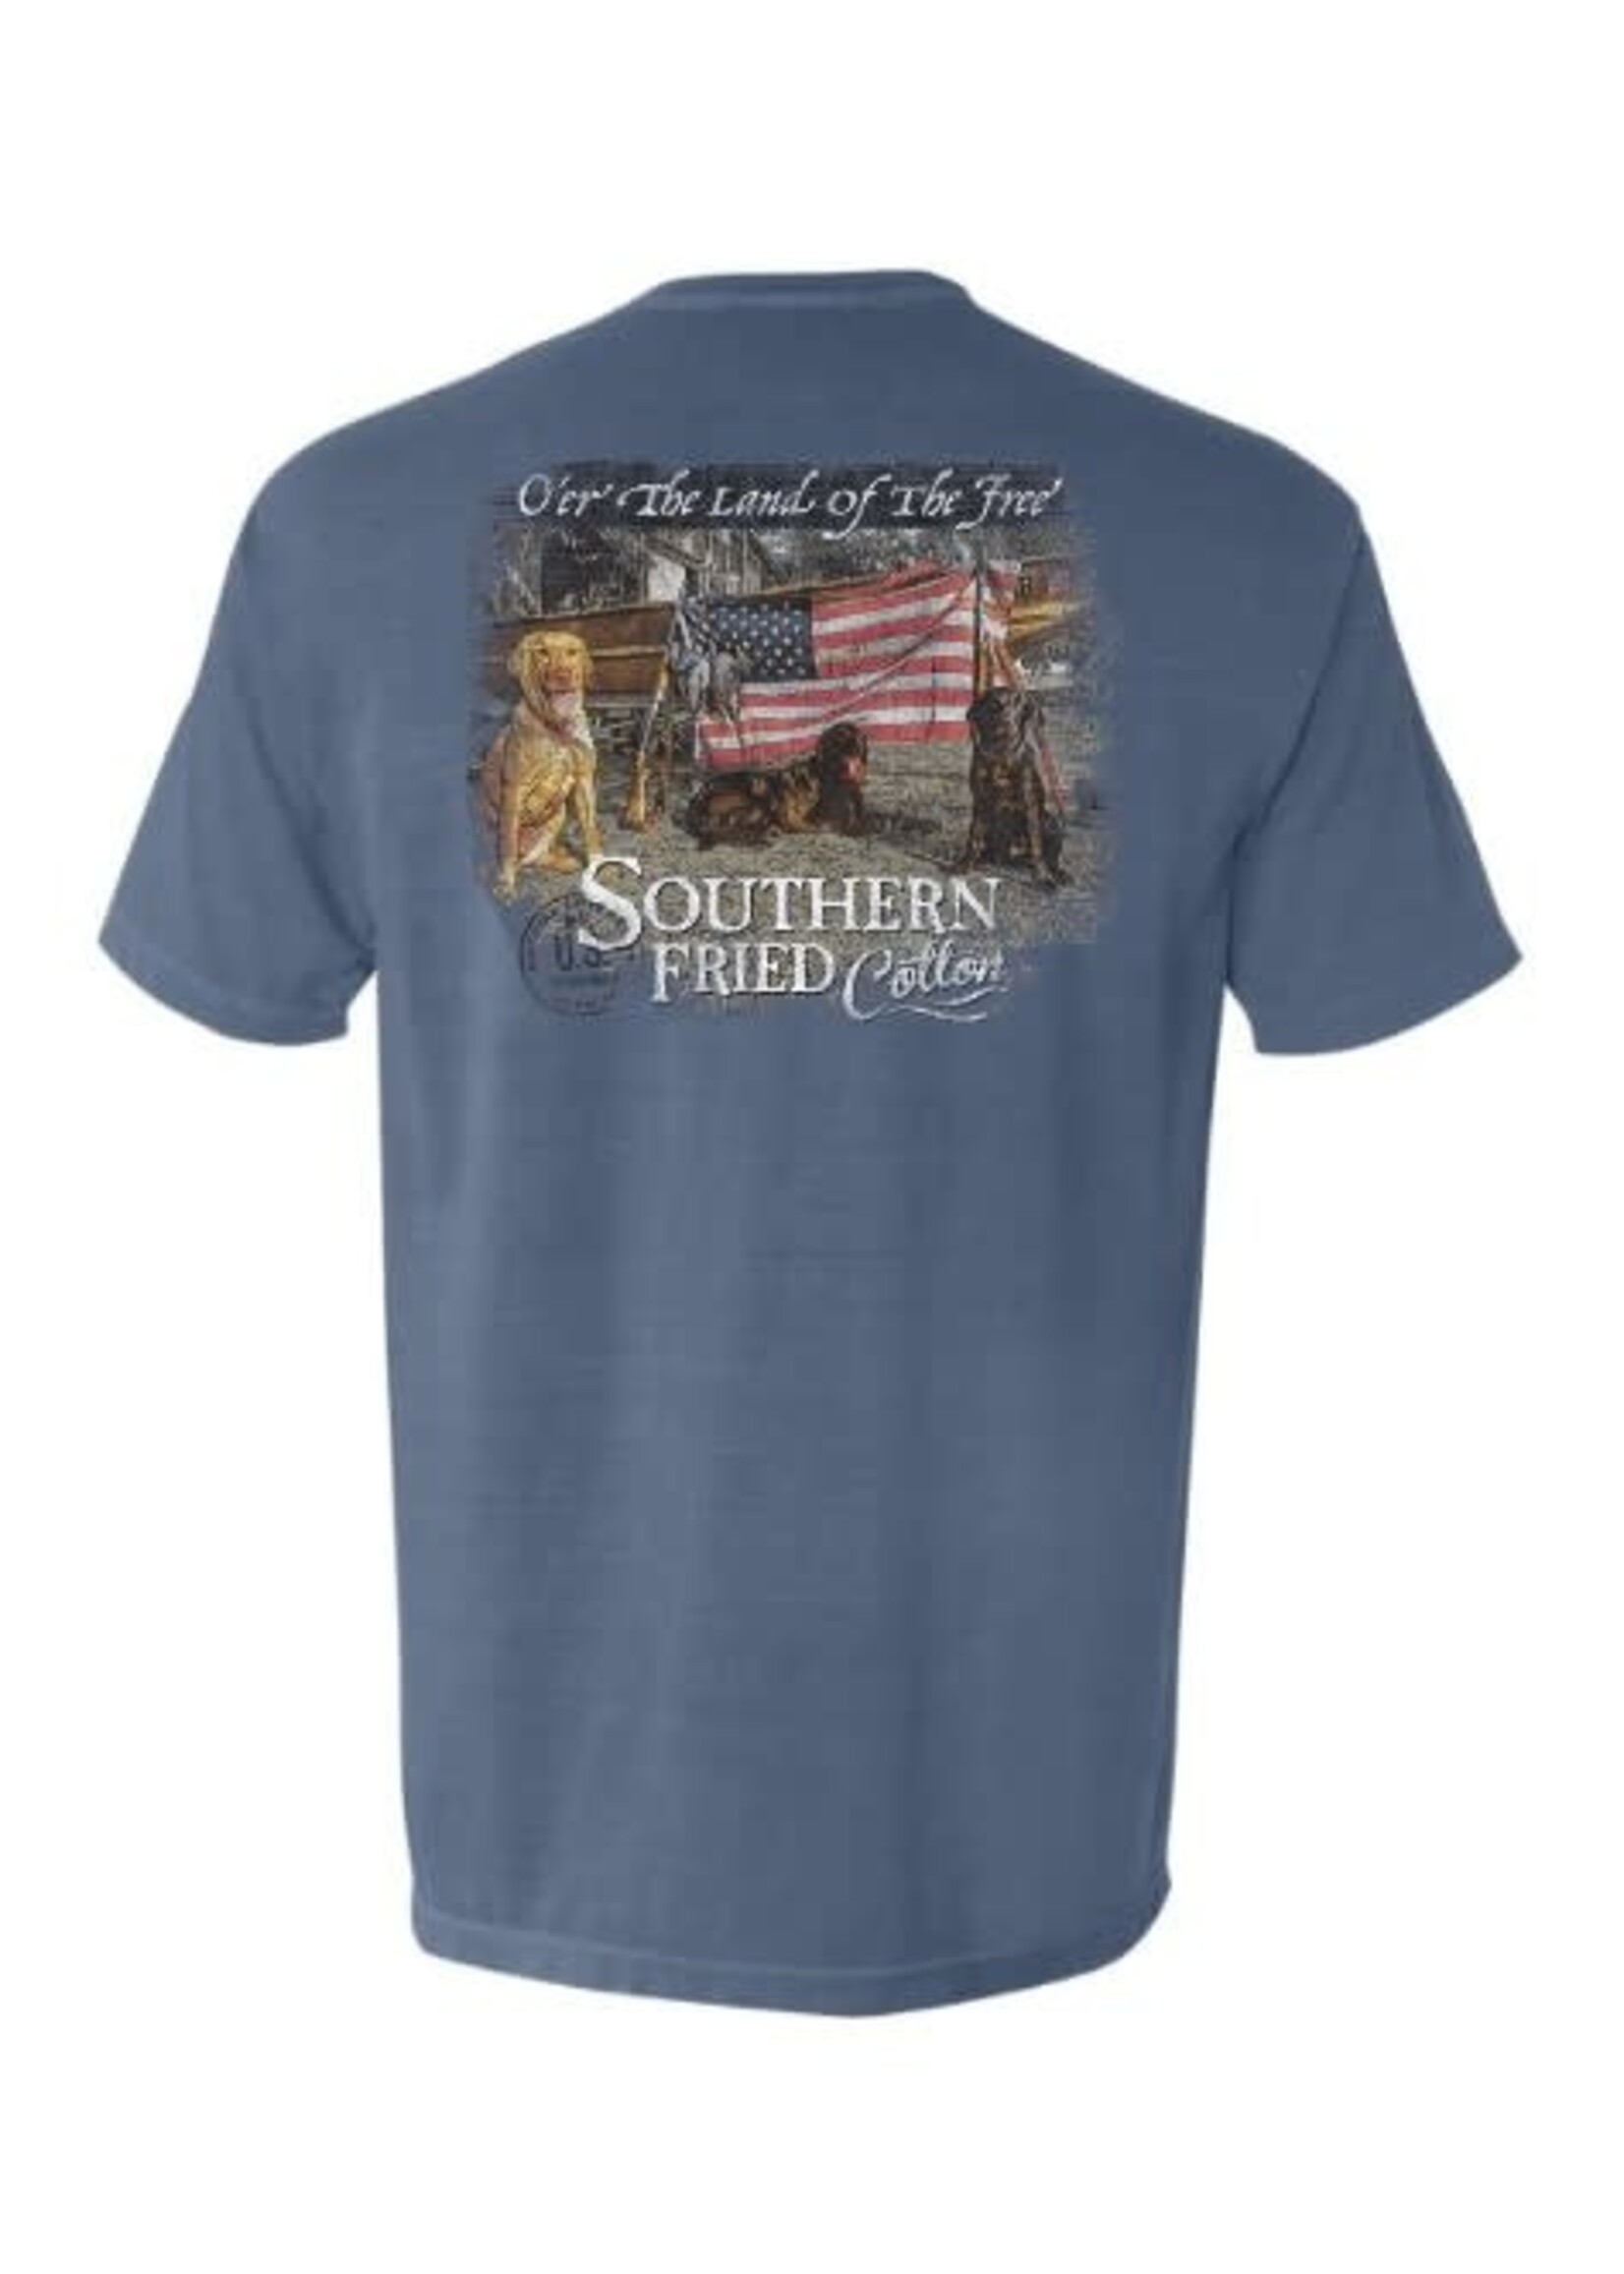 Southern Fried Cotton Southern Patriots